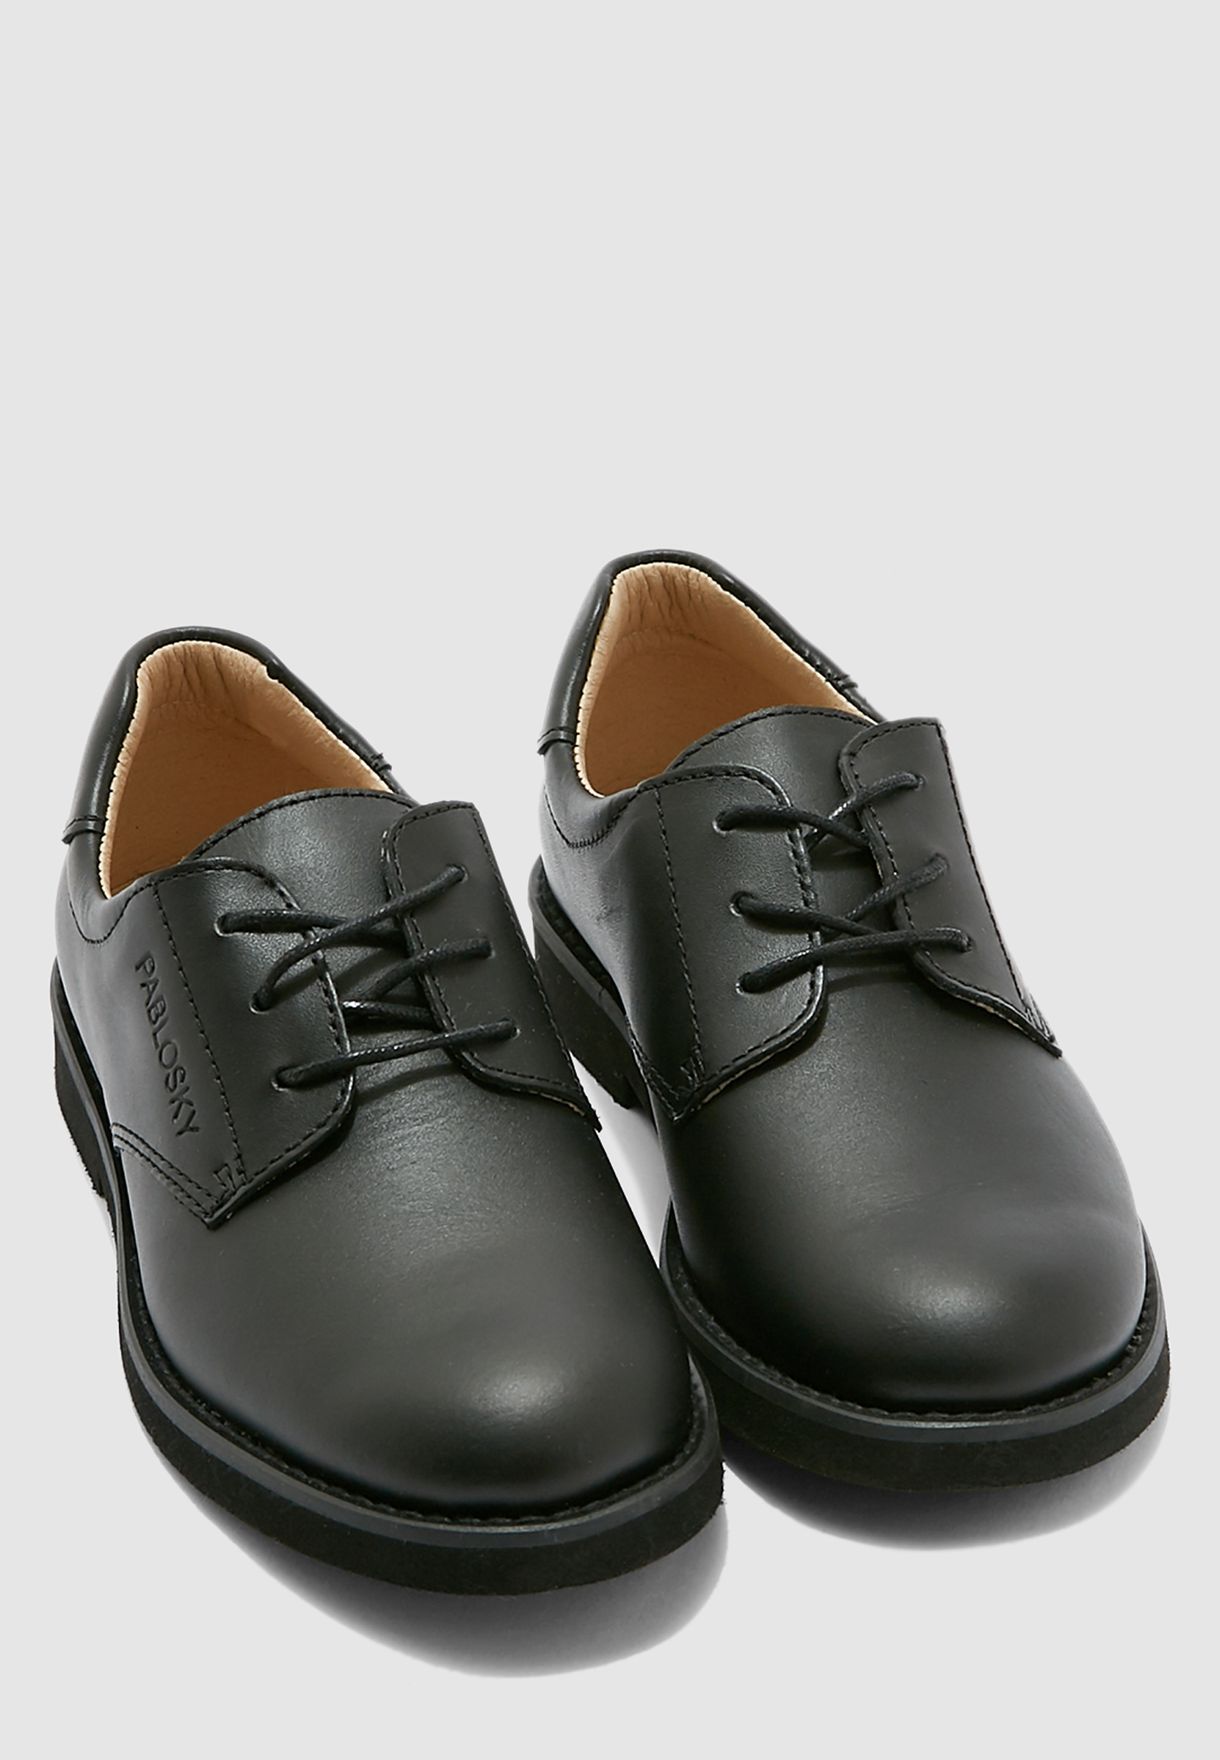 black old school shoes